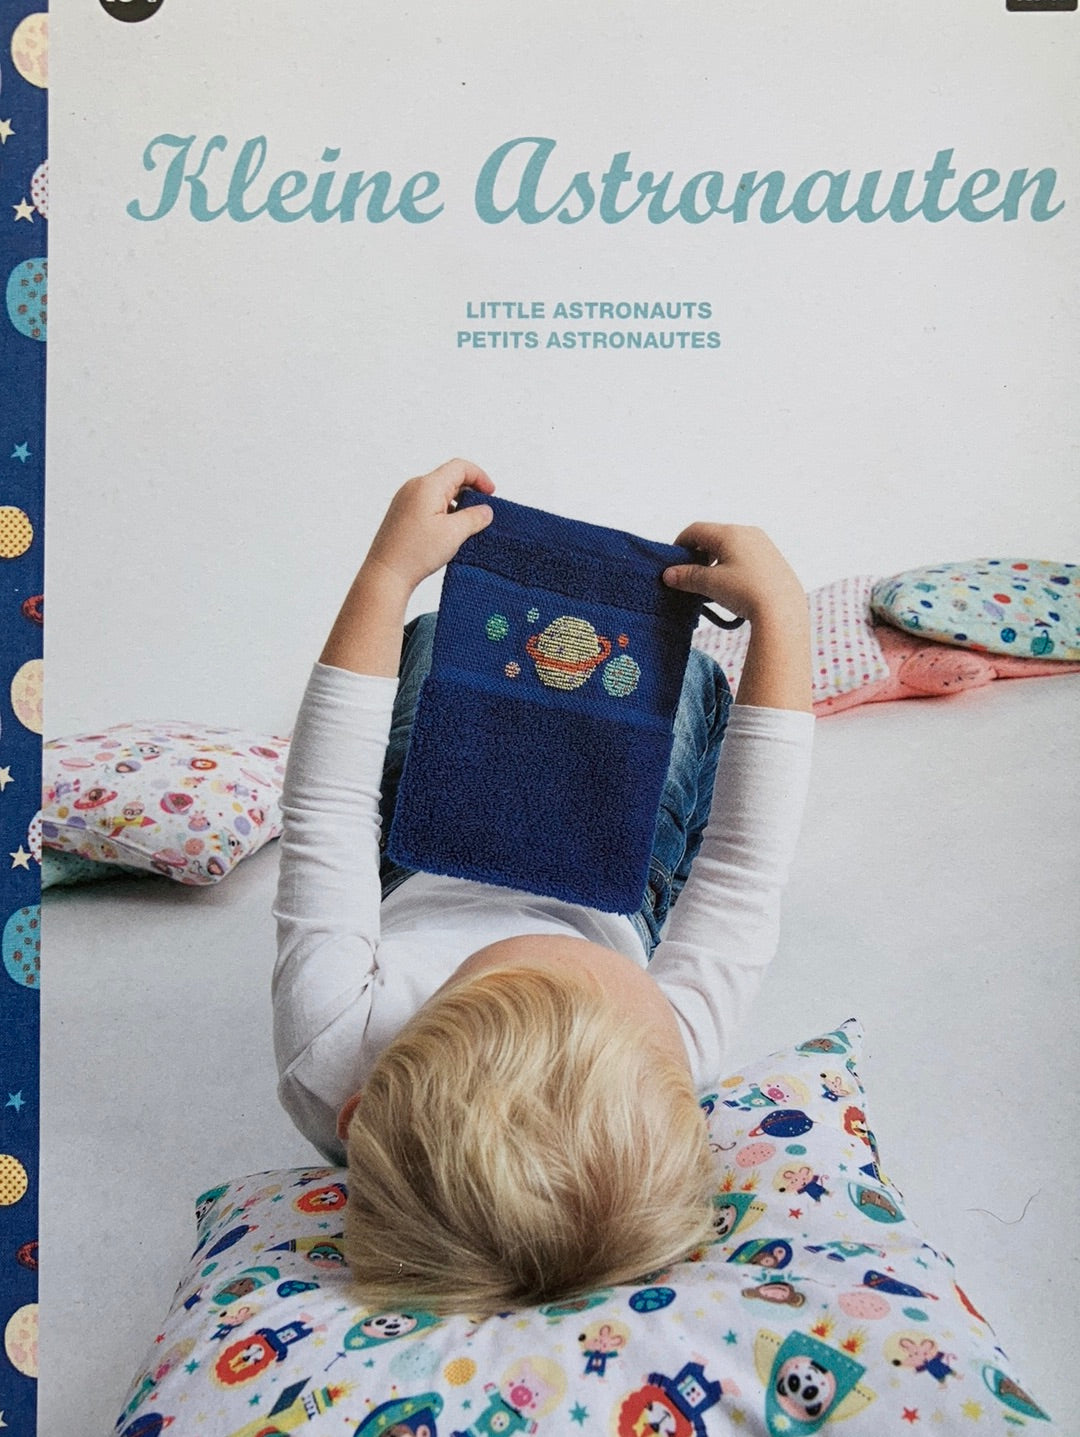 Book 154 Little Astronauts